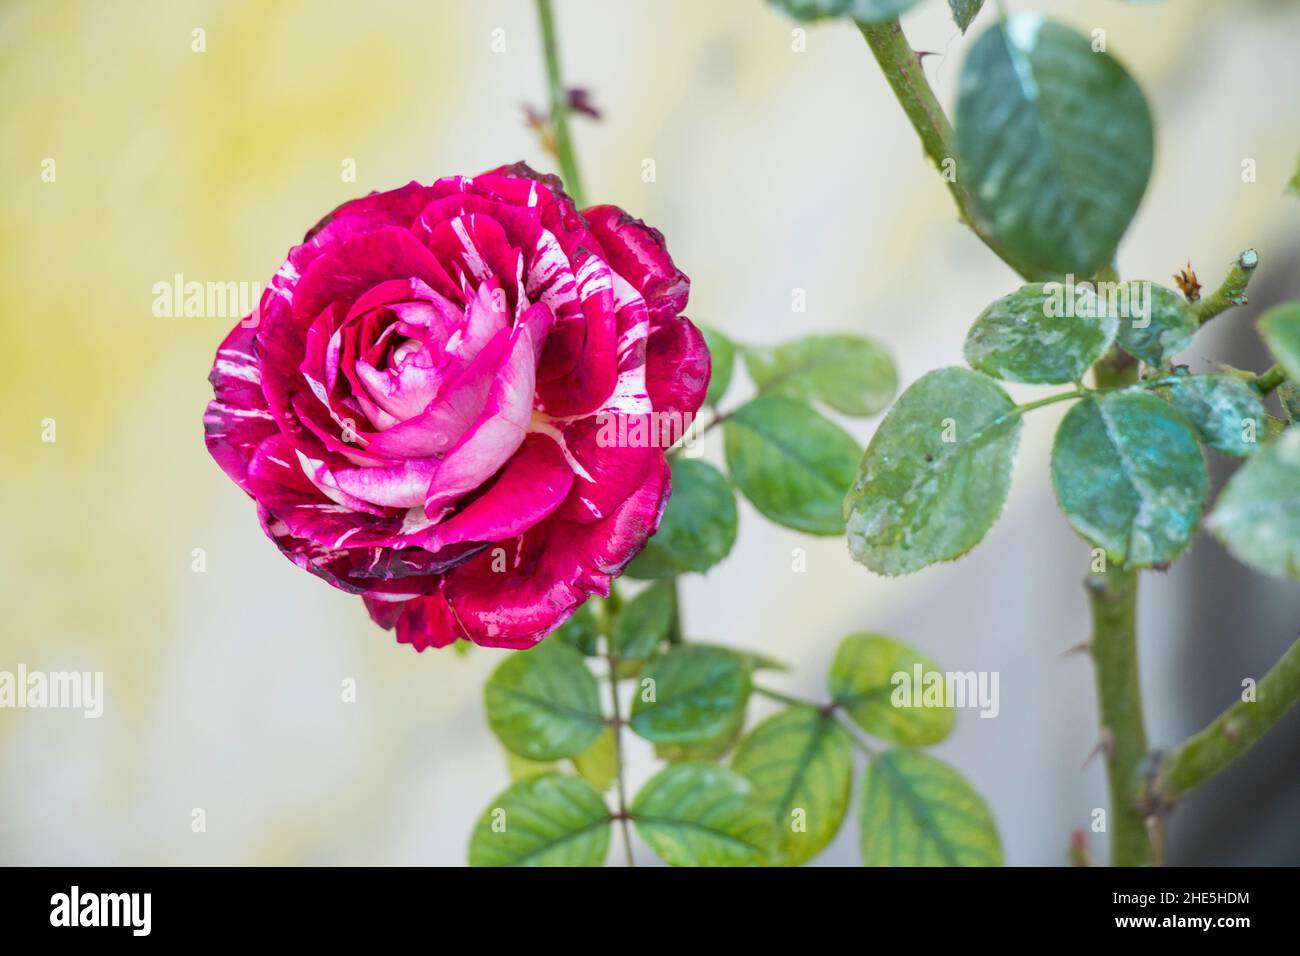 image of abrade dabra rose flower Stock Photo